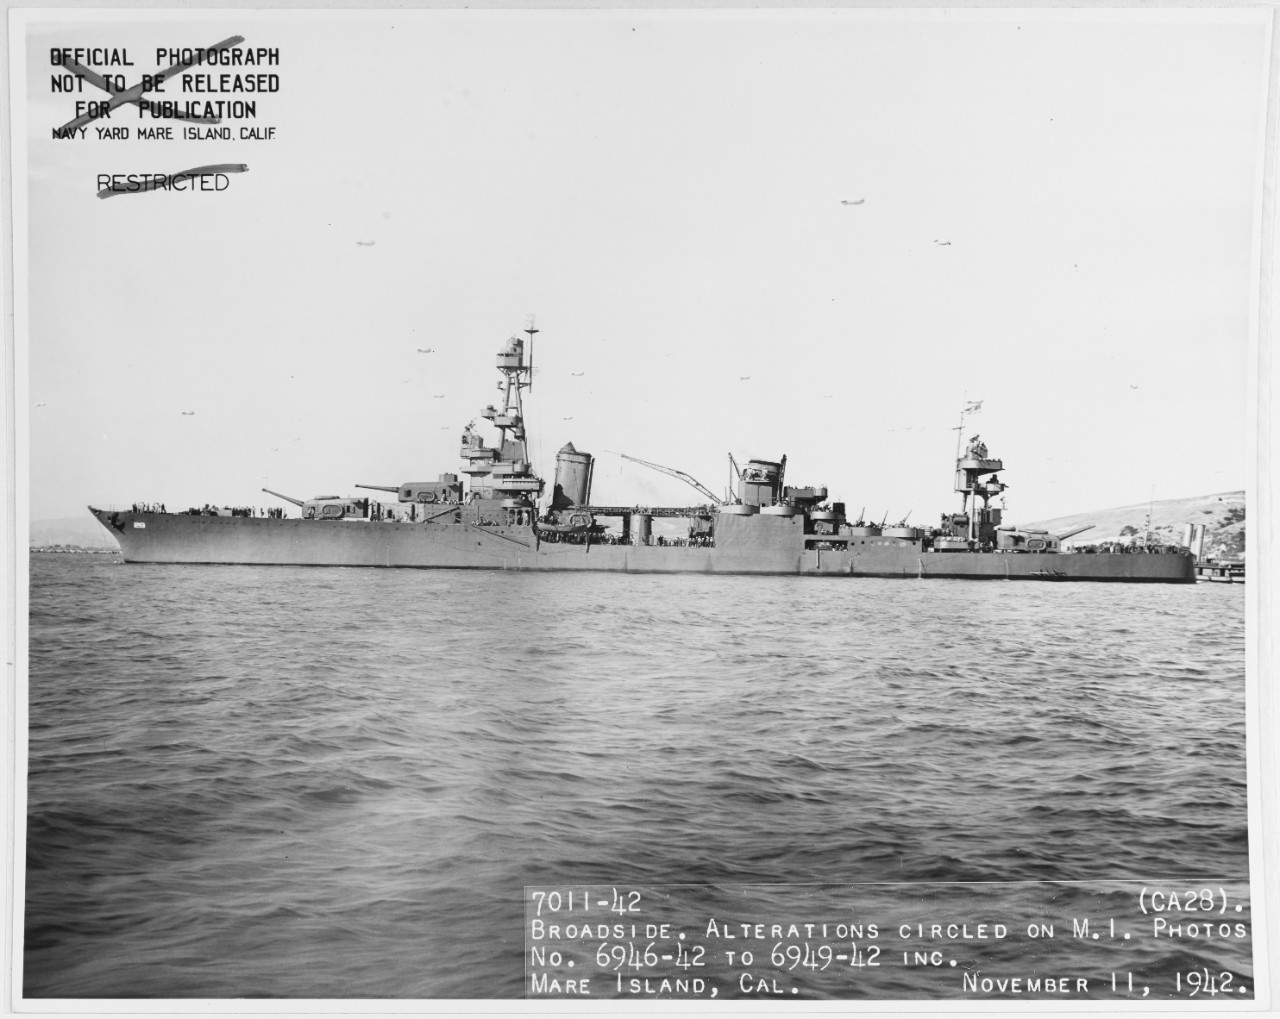 USS LOUISVILLE (CA-28)